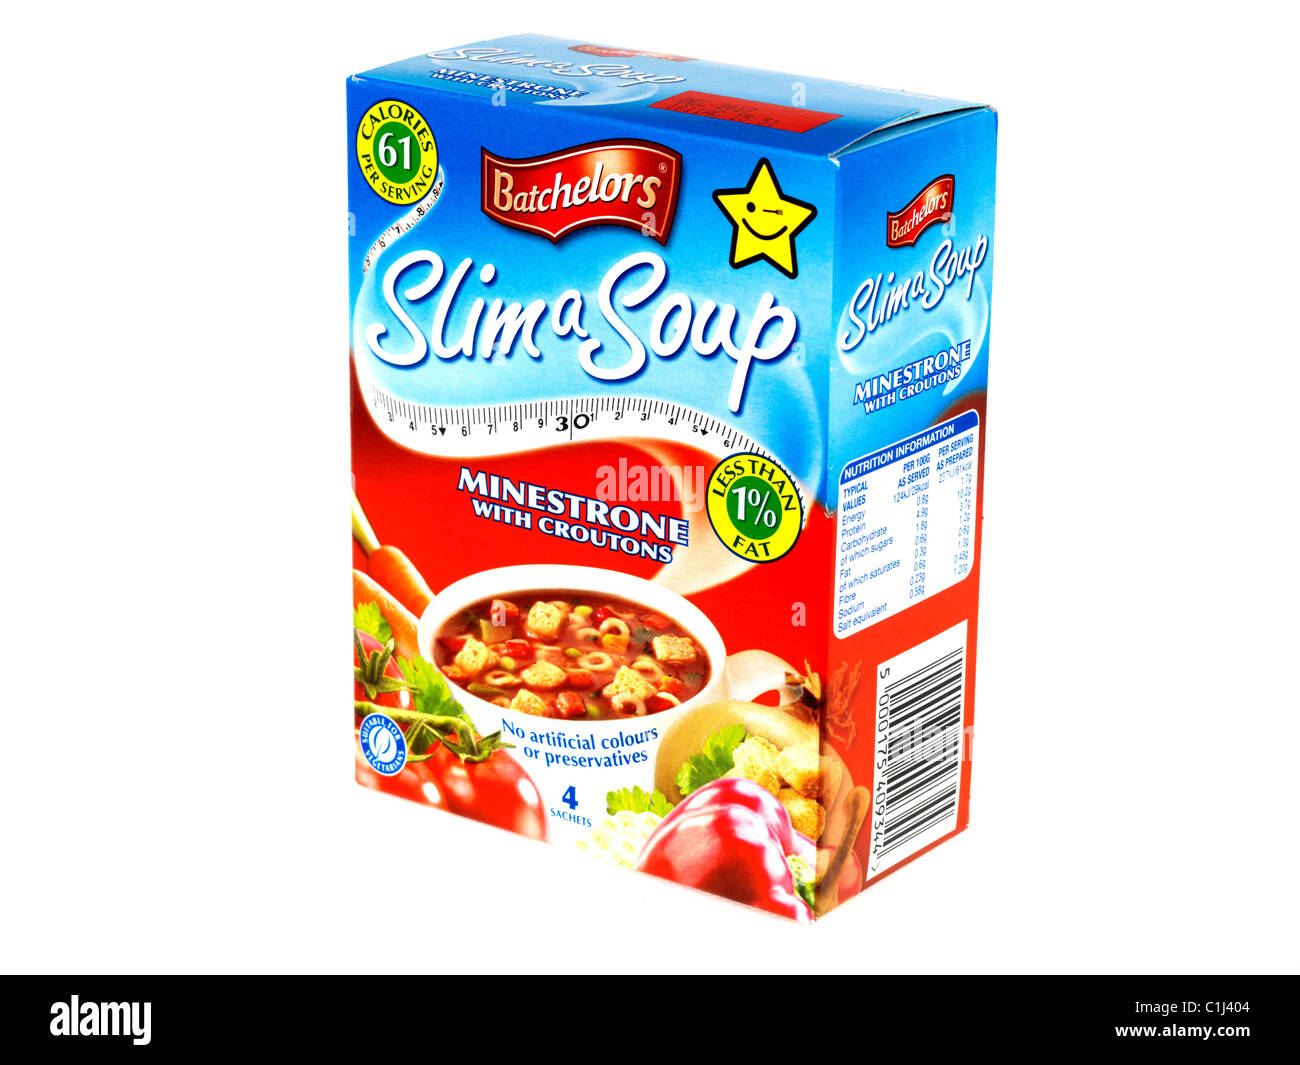 Minestrone Slim a Soup Stock Photo